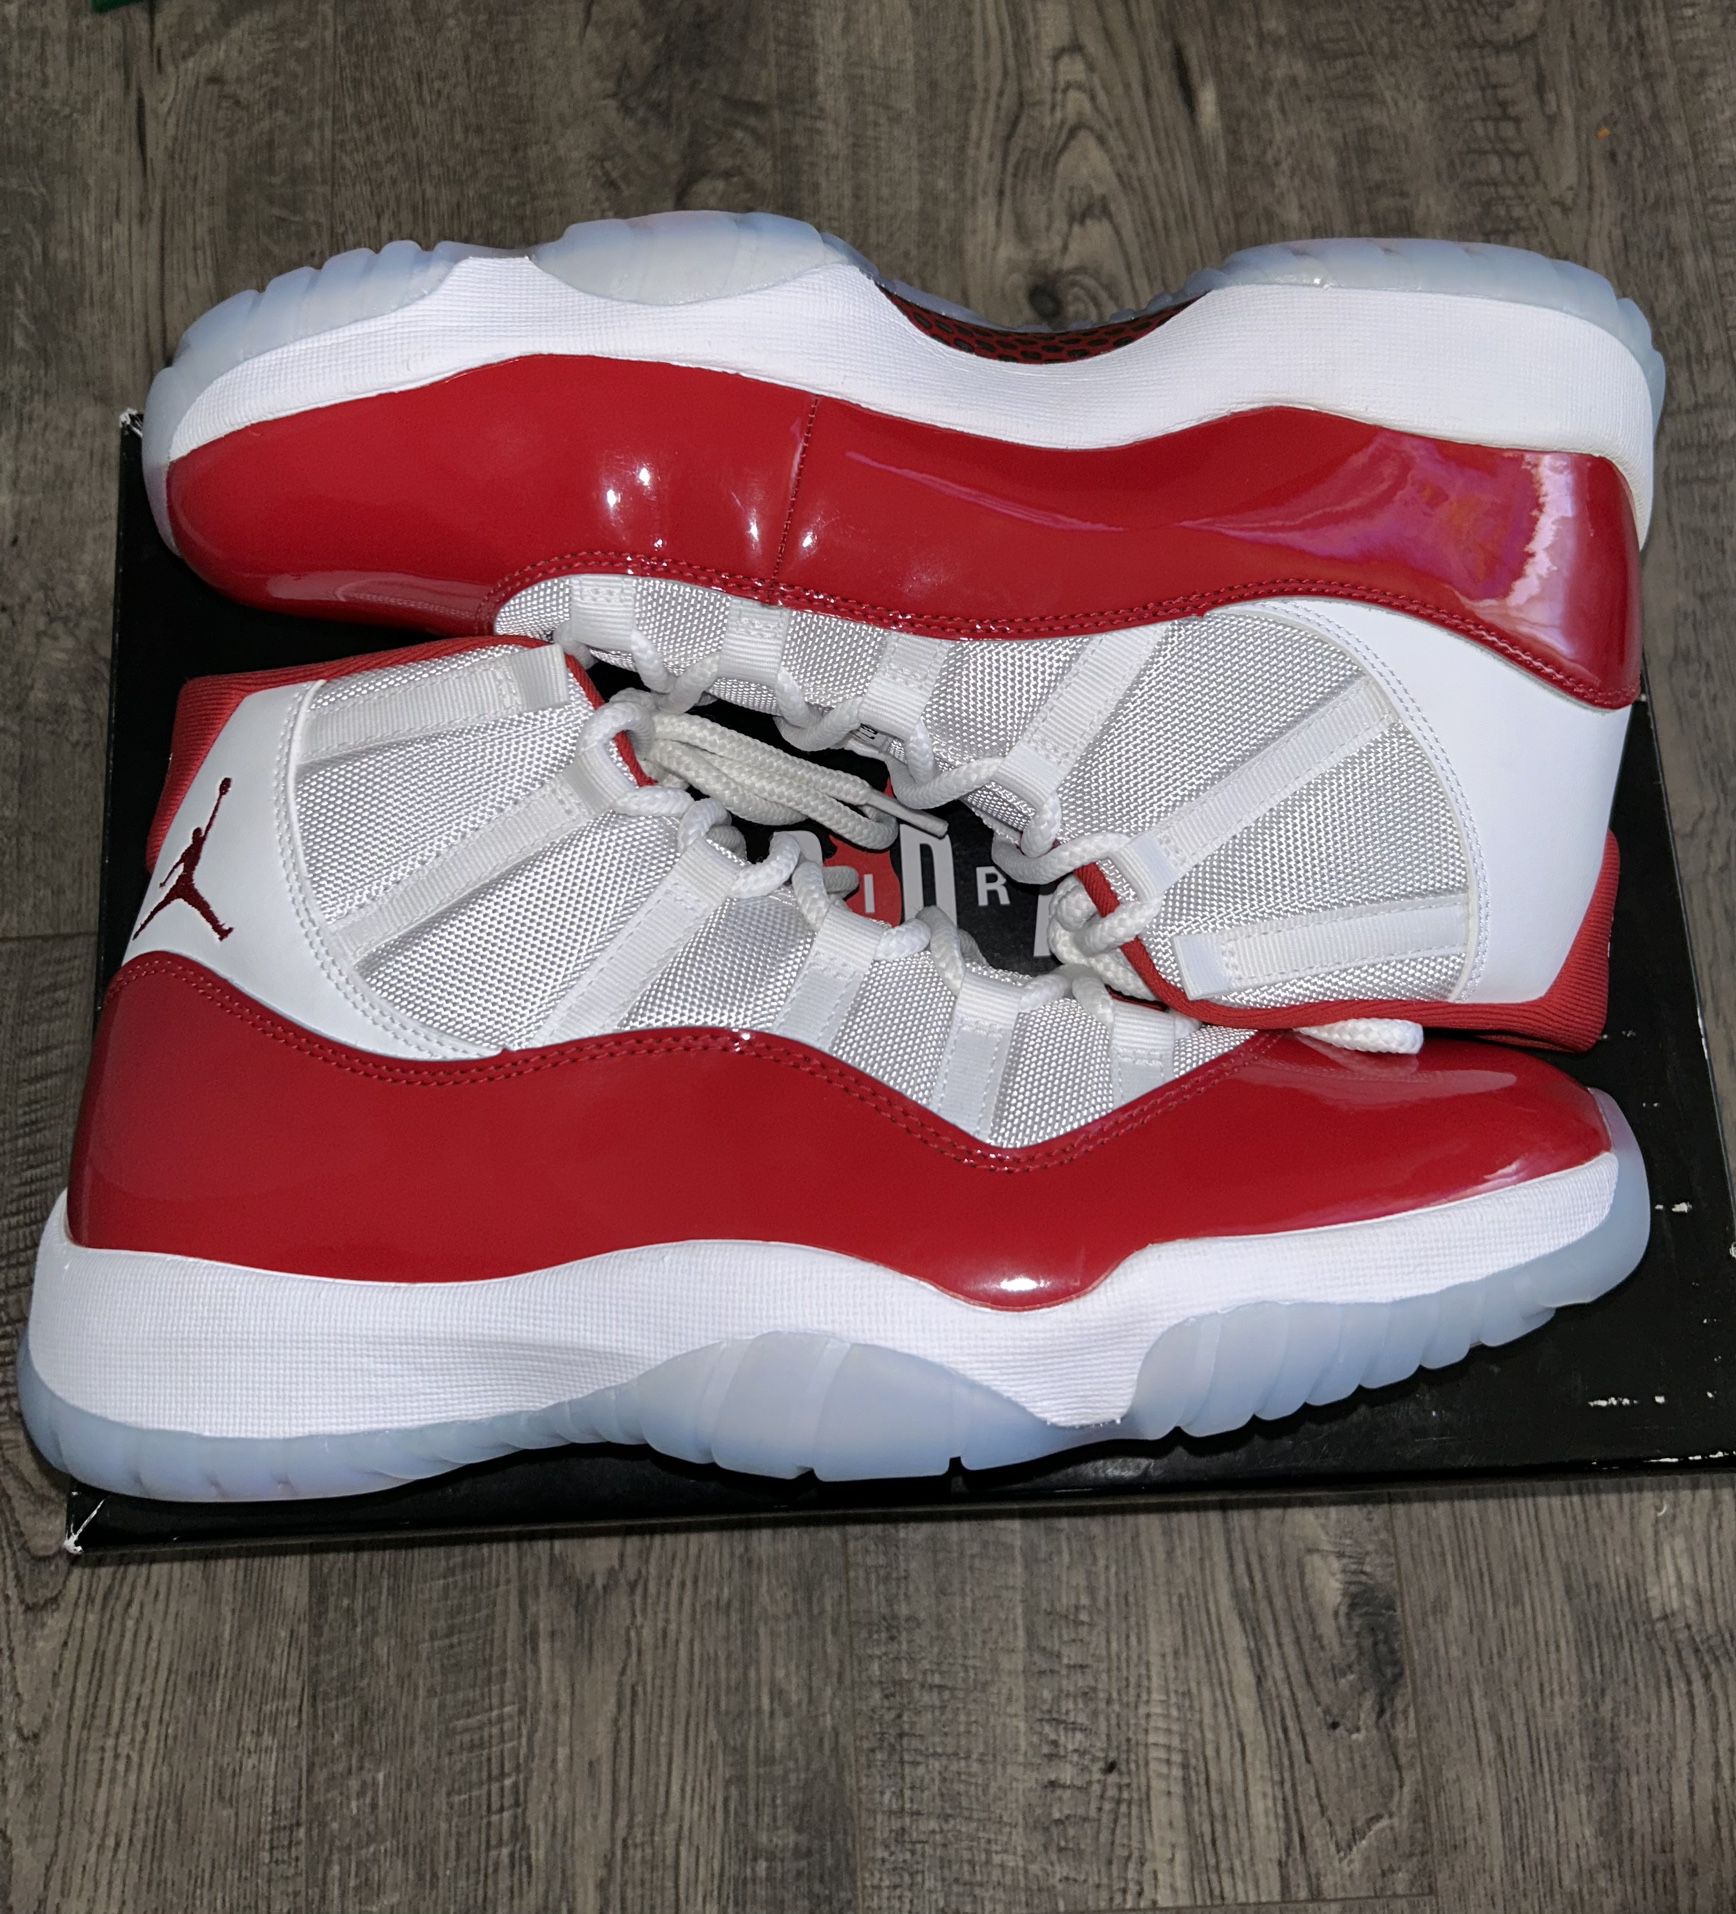 Air Jordan 11 “Cherry” Men’s Size 12.5